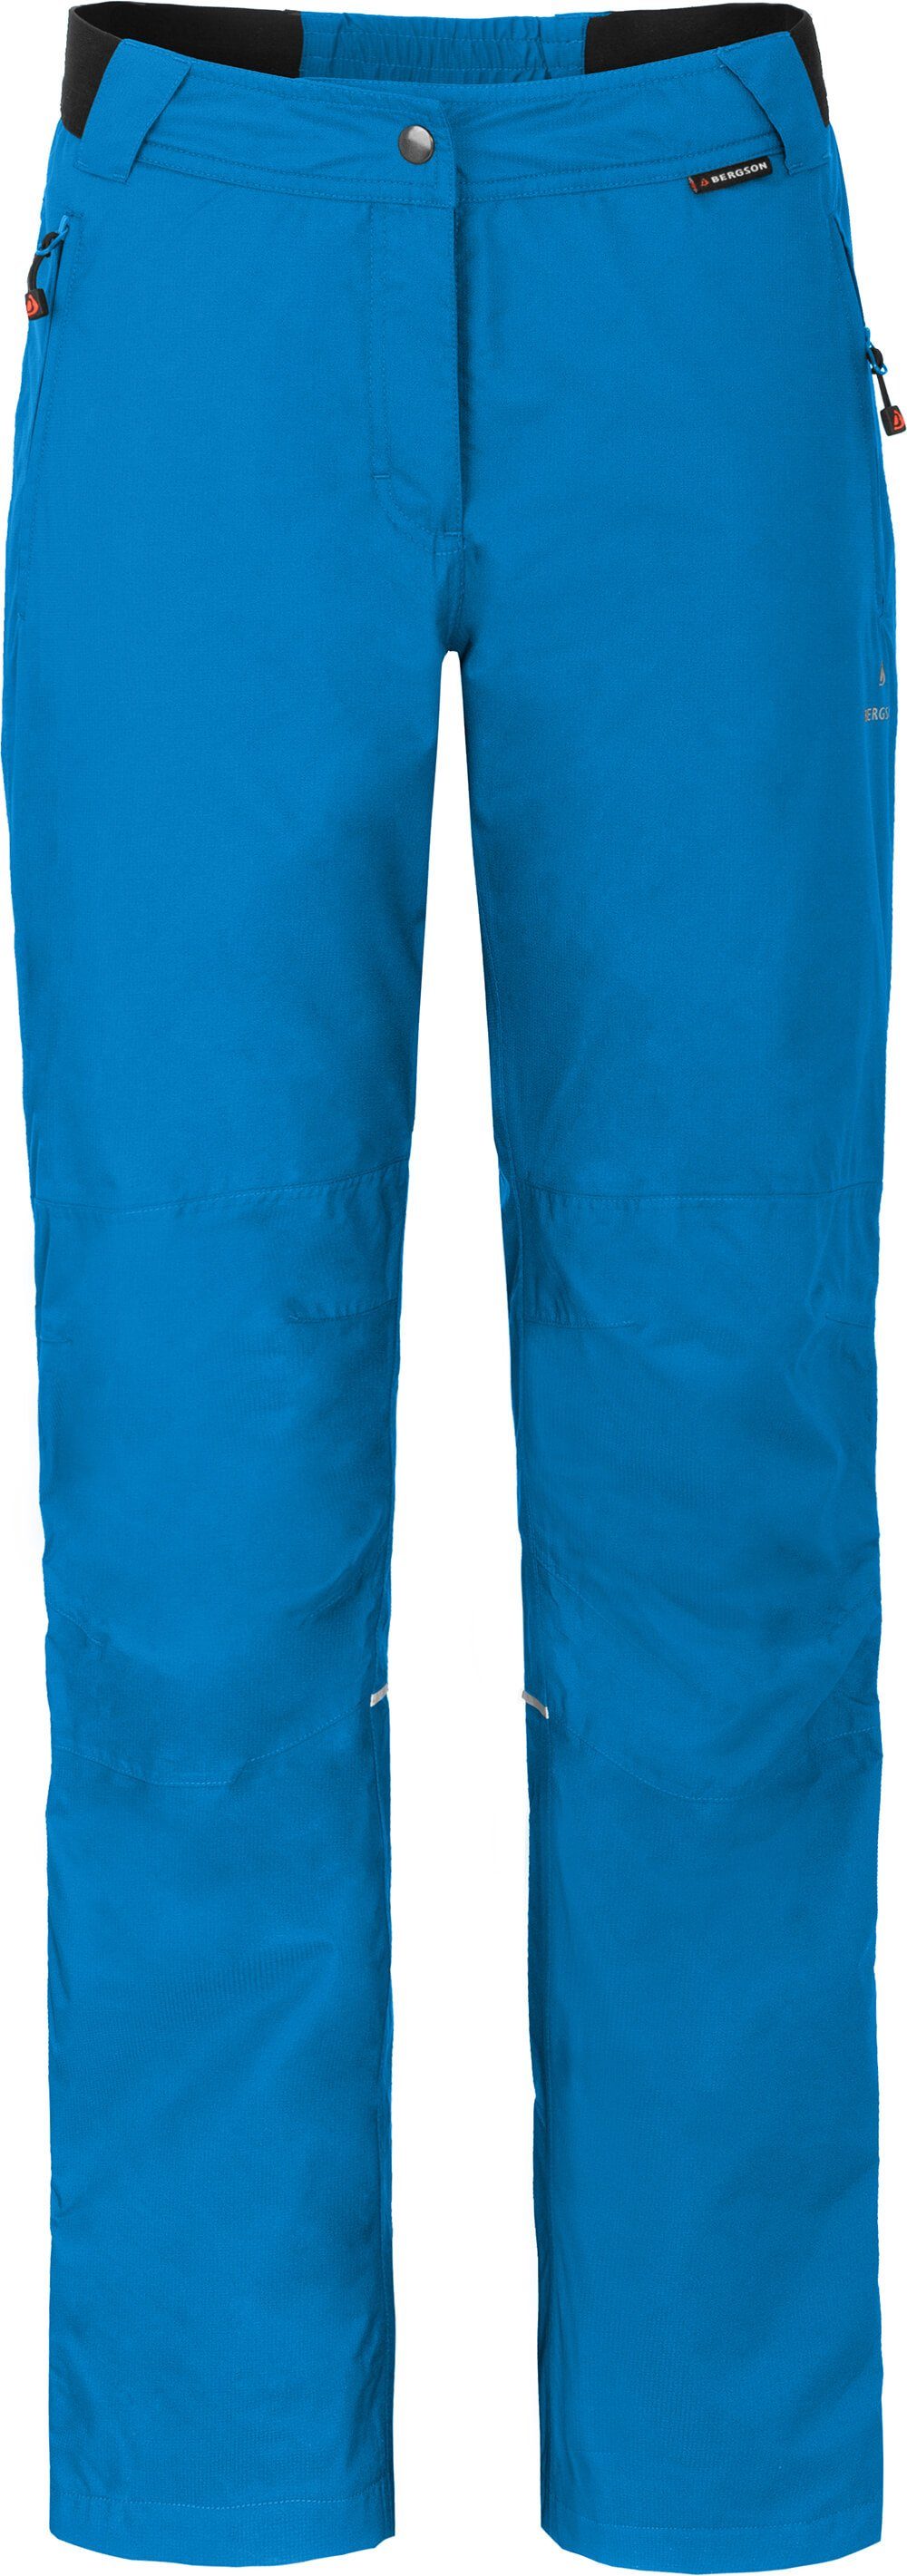 Bergson Regenhose LYNDE COMFORT Thermo Damen Regenhose, leicht wattiert,  12000 mm Wassersäule, Normalgrößen, blau